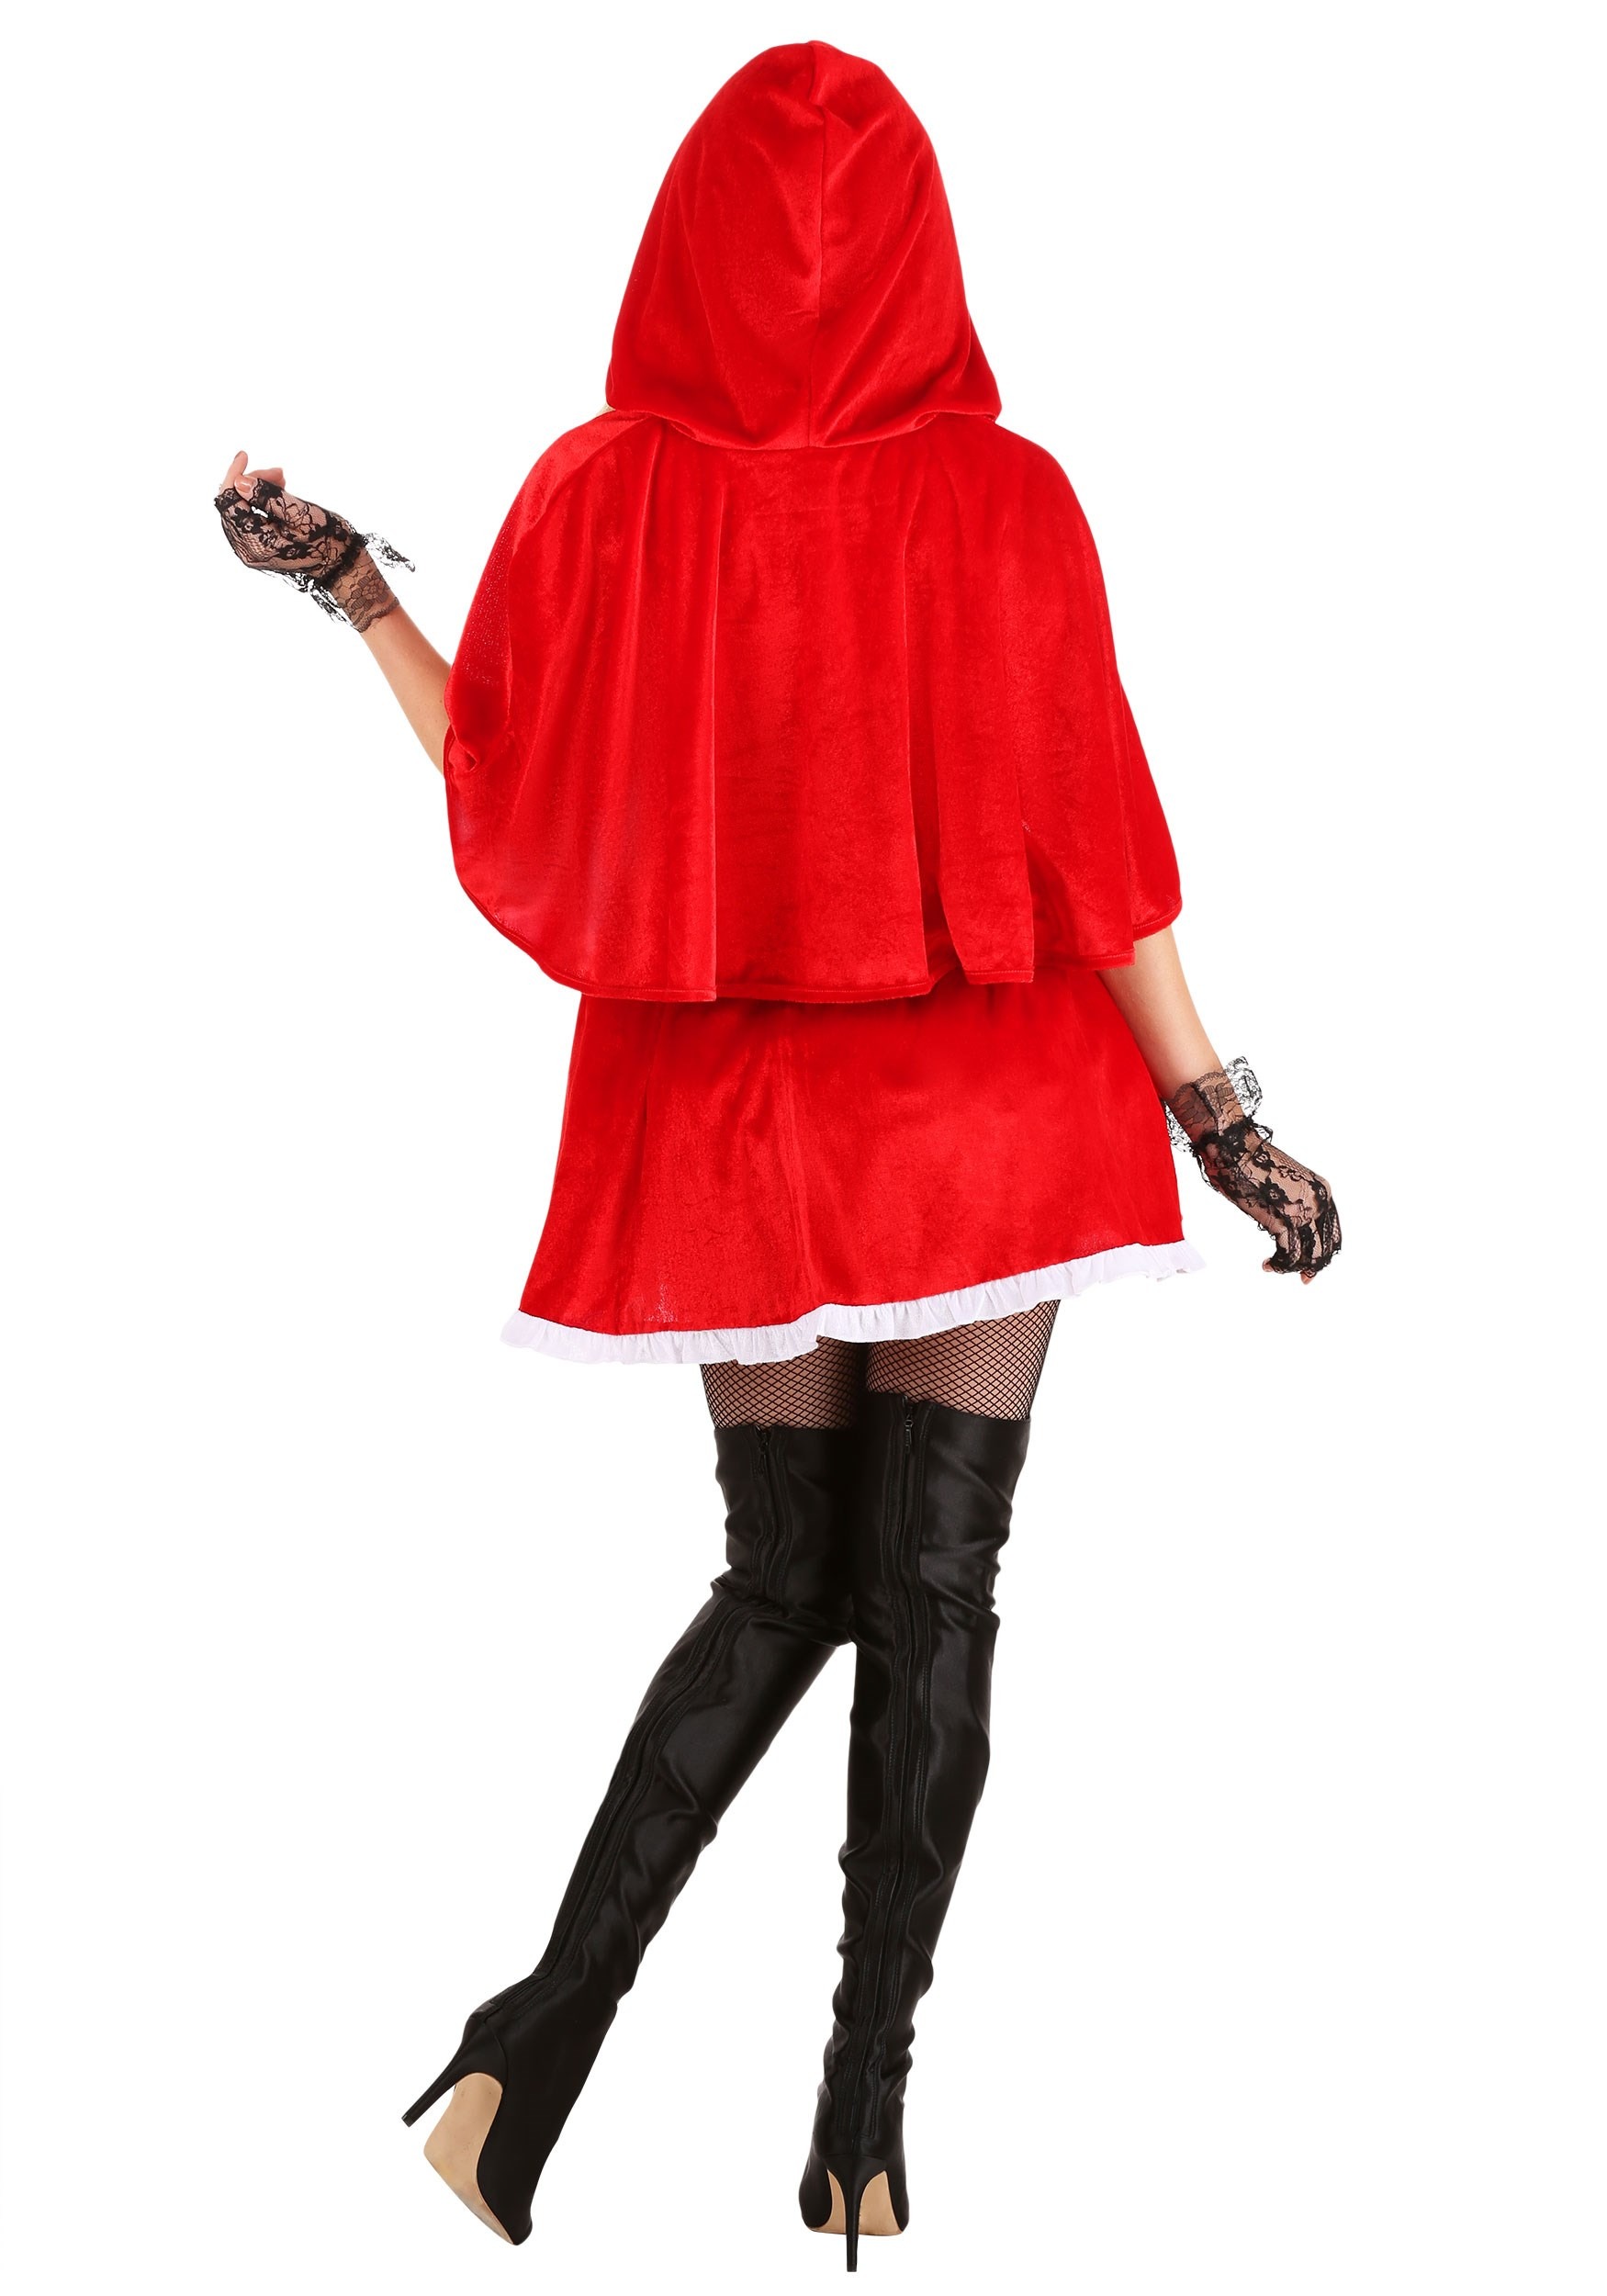 Red Hot Riding Hood Fancy Dress Costume For Women